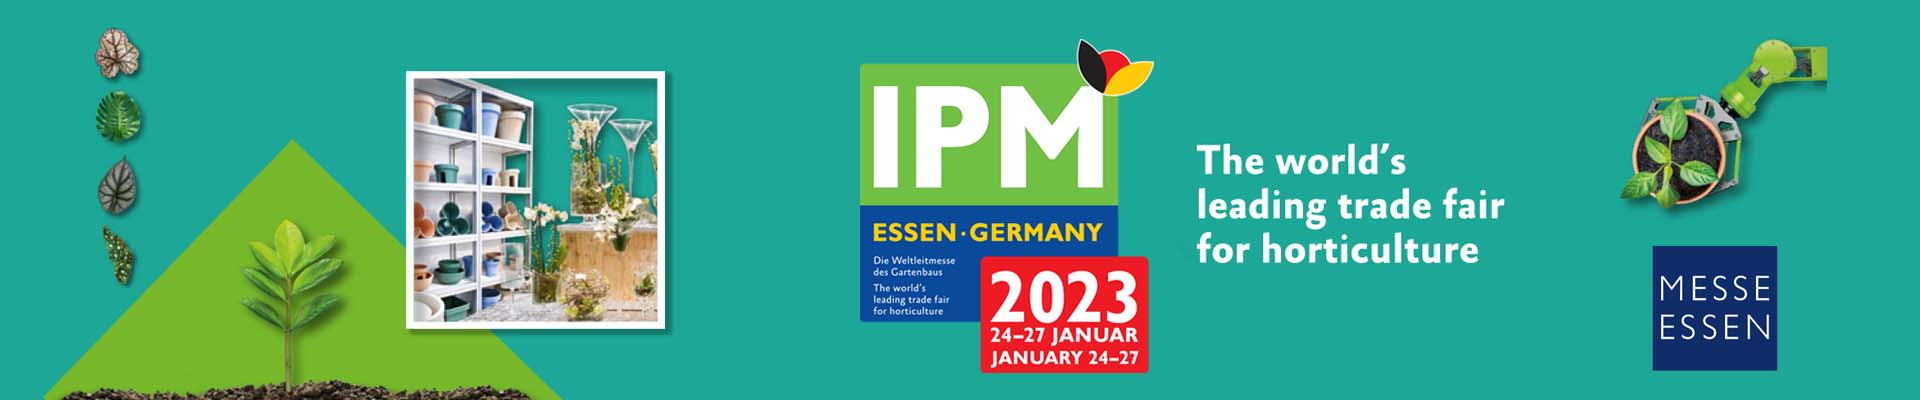 IPM Essen 24 – 27 January 2023